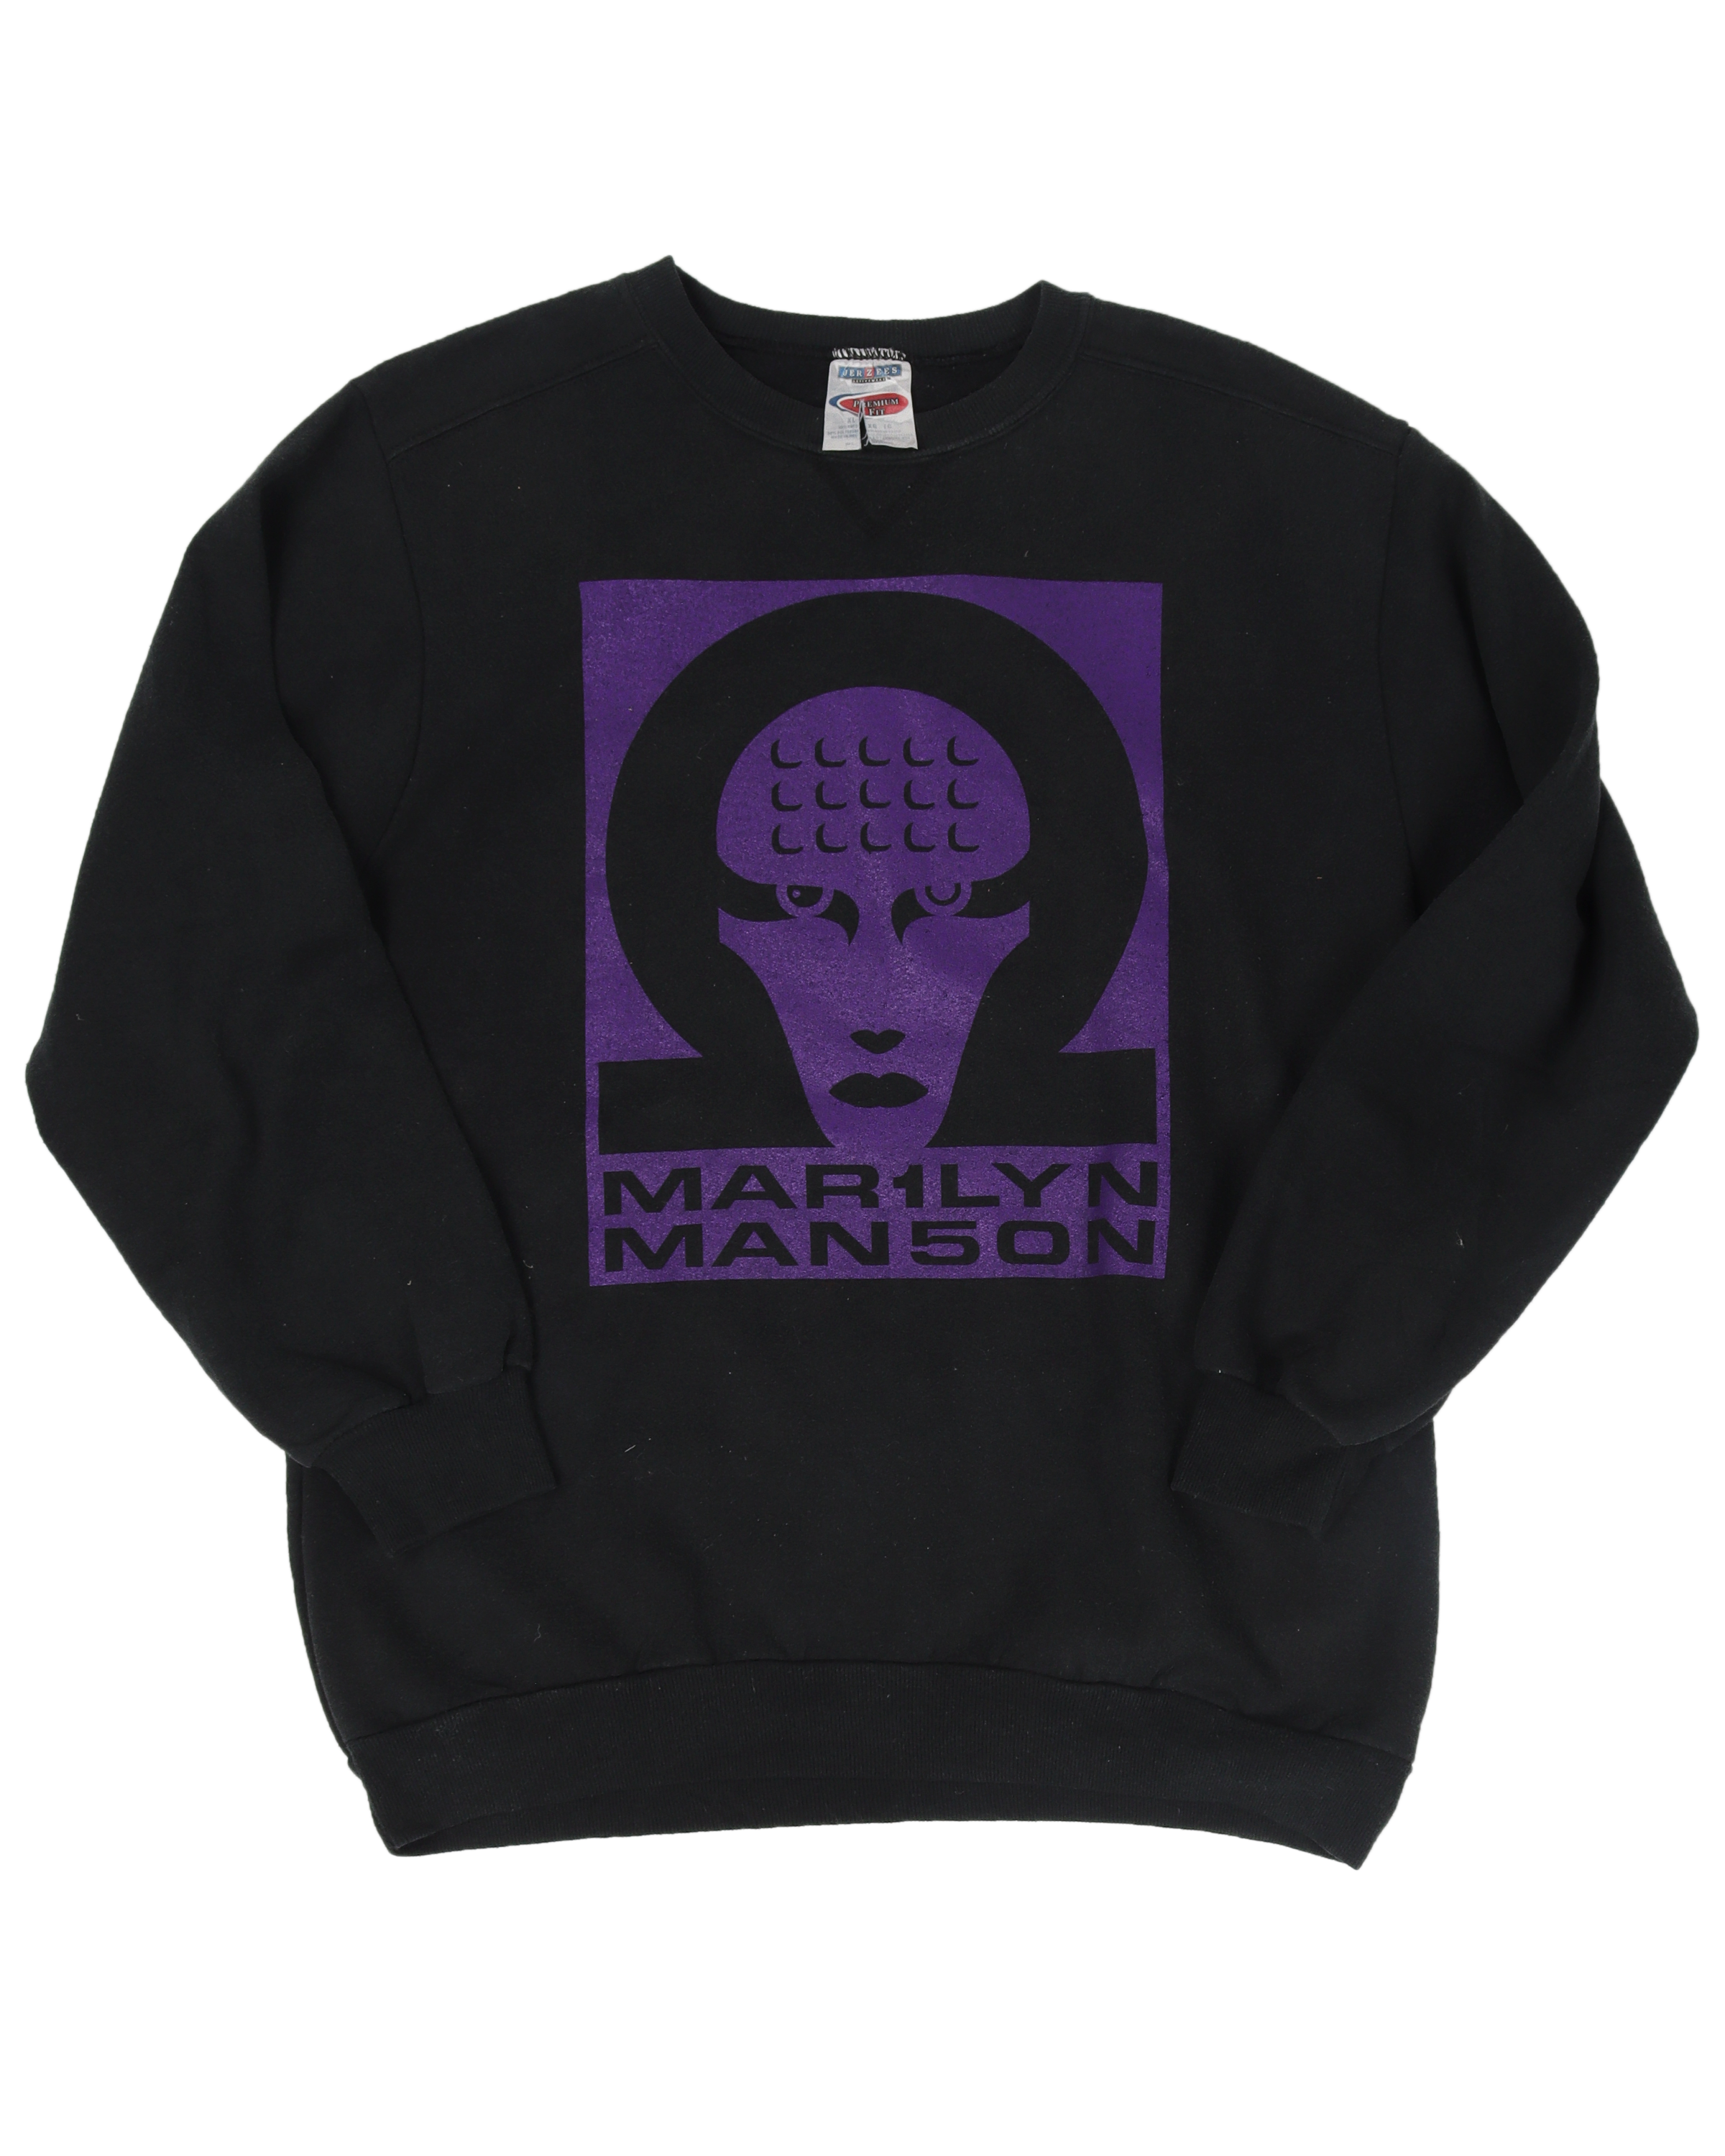 Marilyn Manson "Mechanical Animals" Sweatshirt